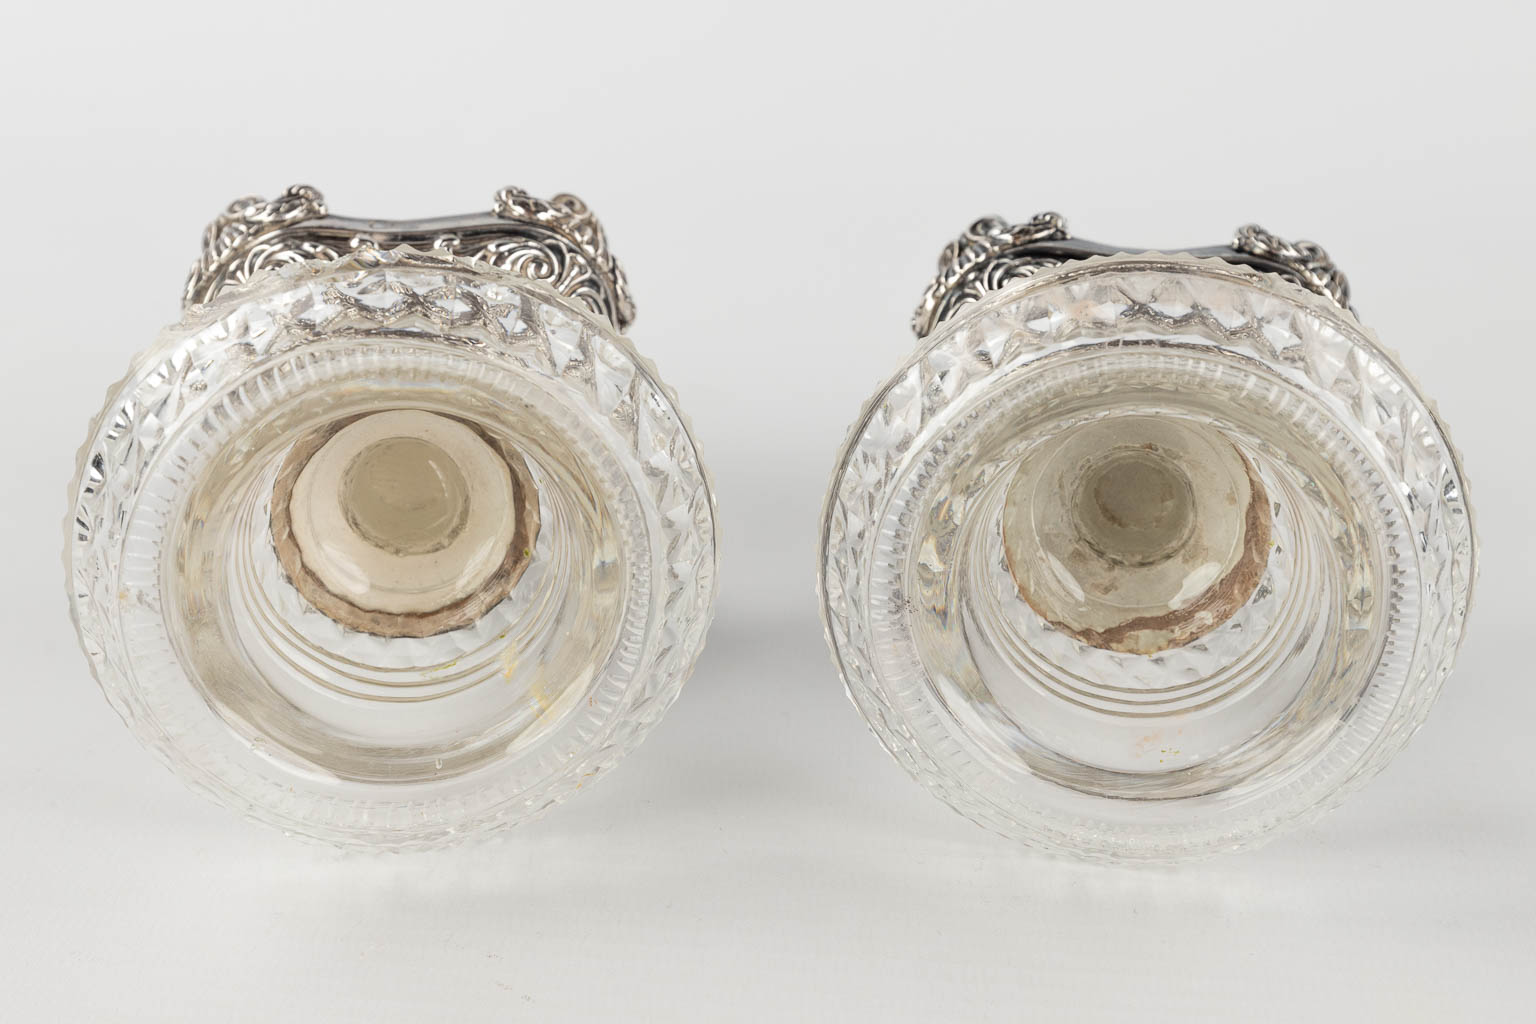 A pepper and salt jar, crystal on a silver base. Belgium, 19th century. (H: 9 x D: 9 cm)